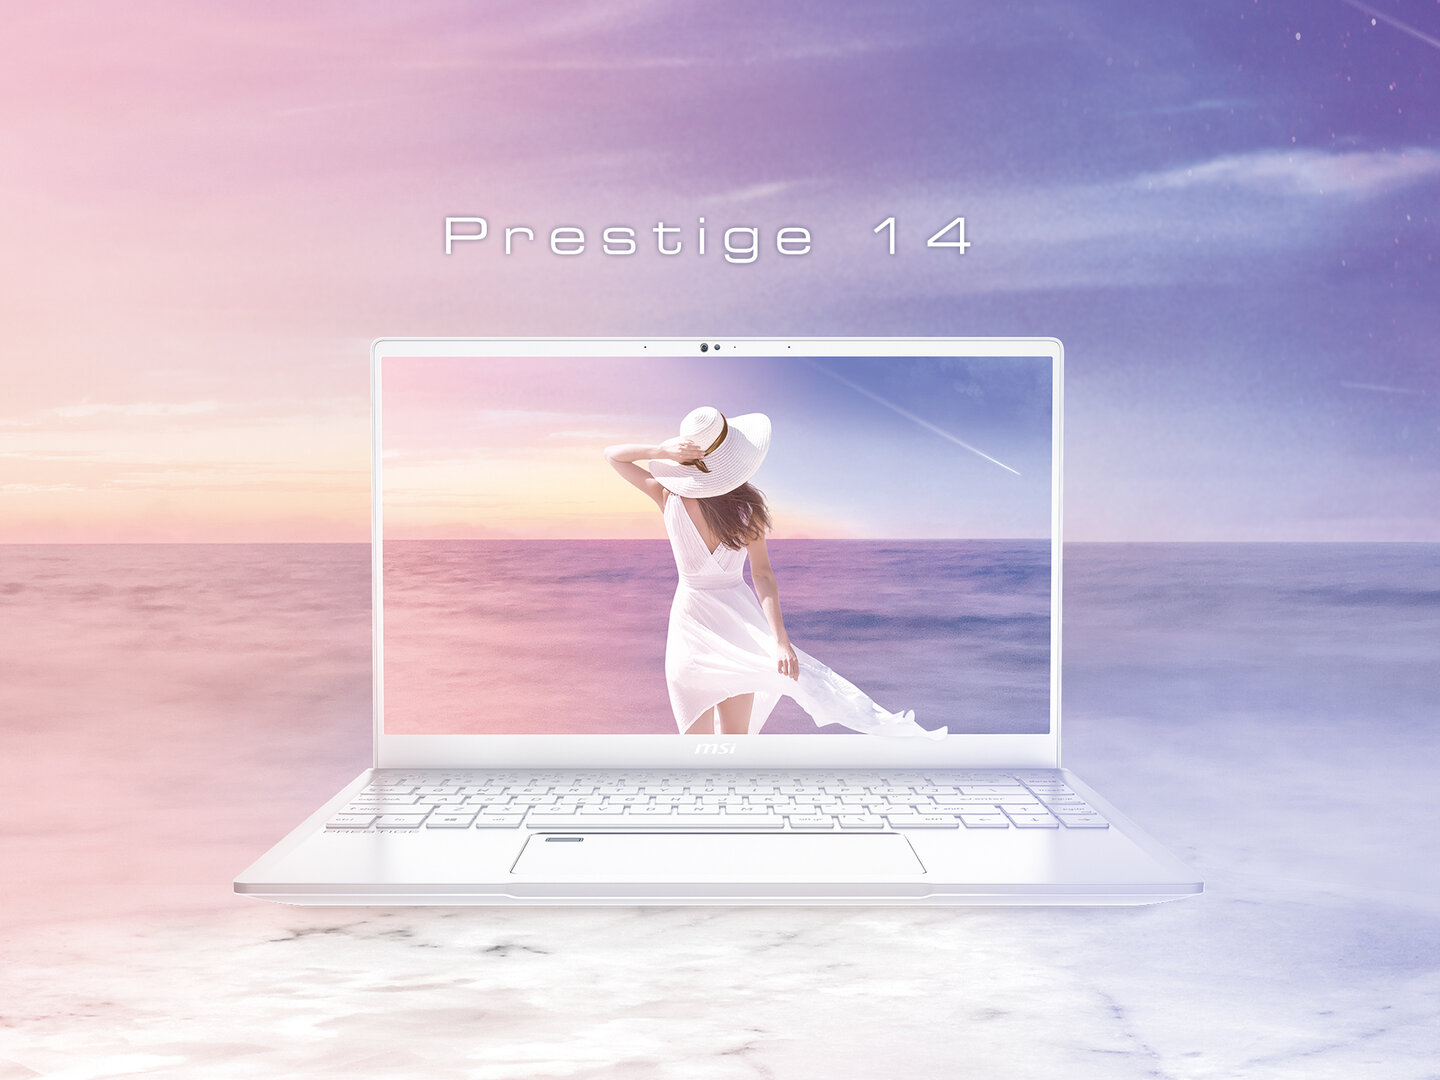 MSI Prestige 14 white